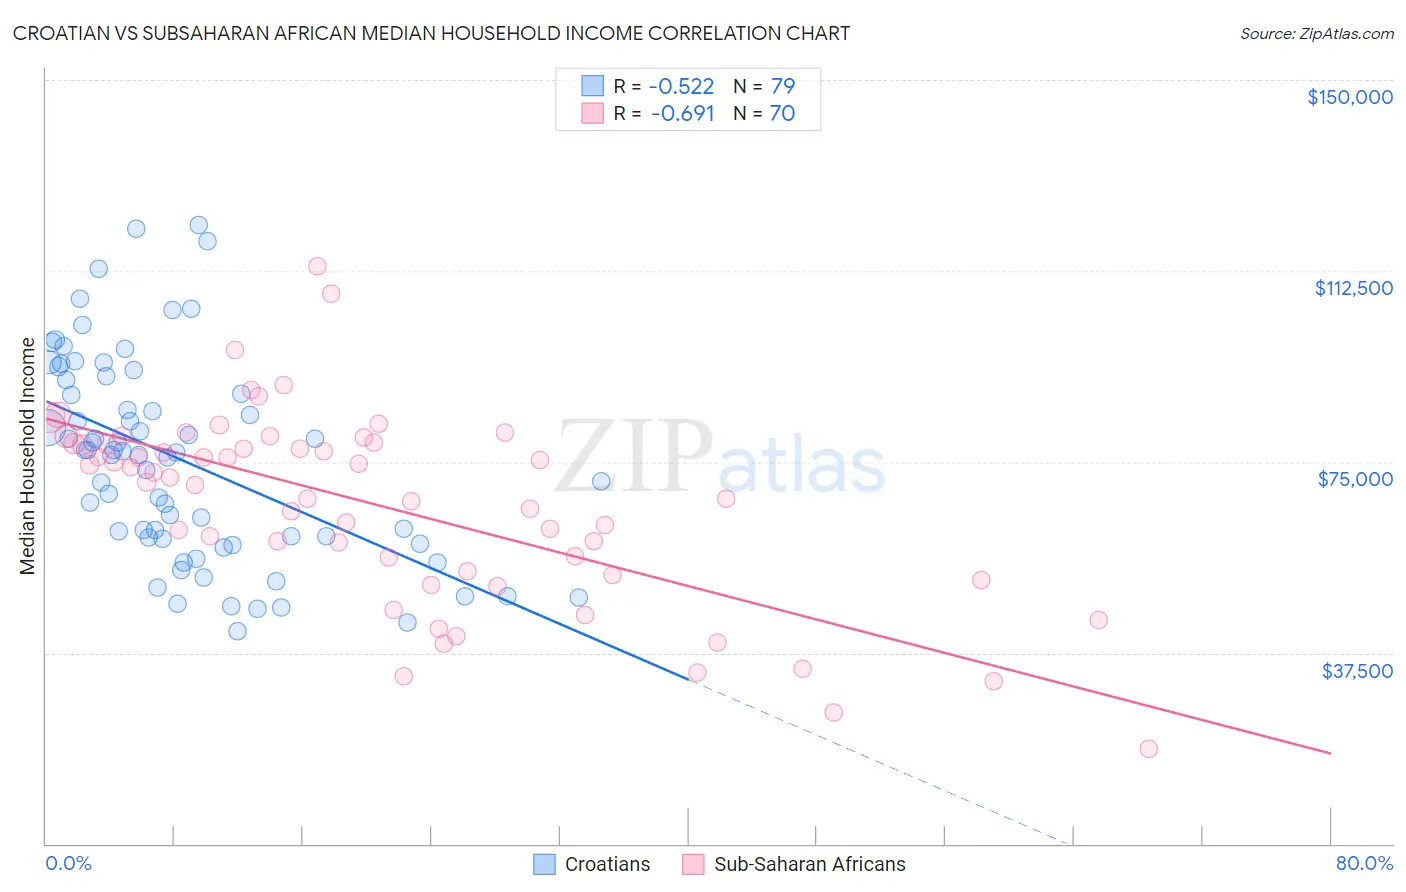 Croatian vs Subsaharan African Median Household Income